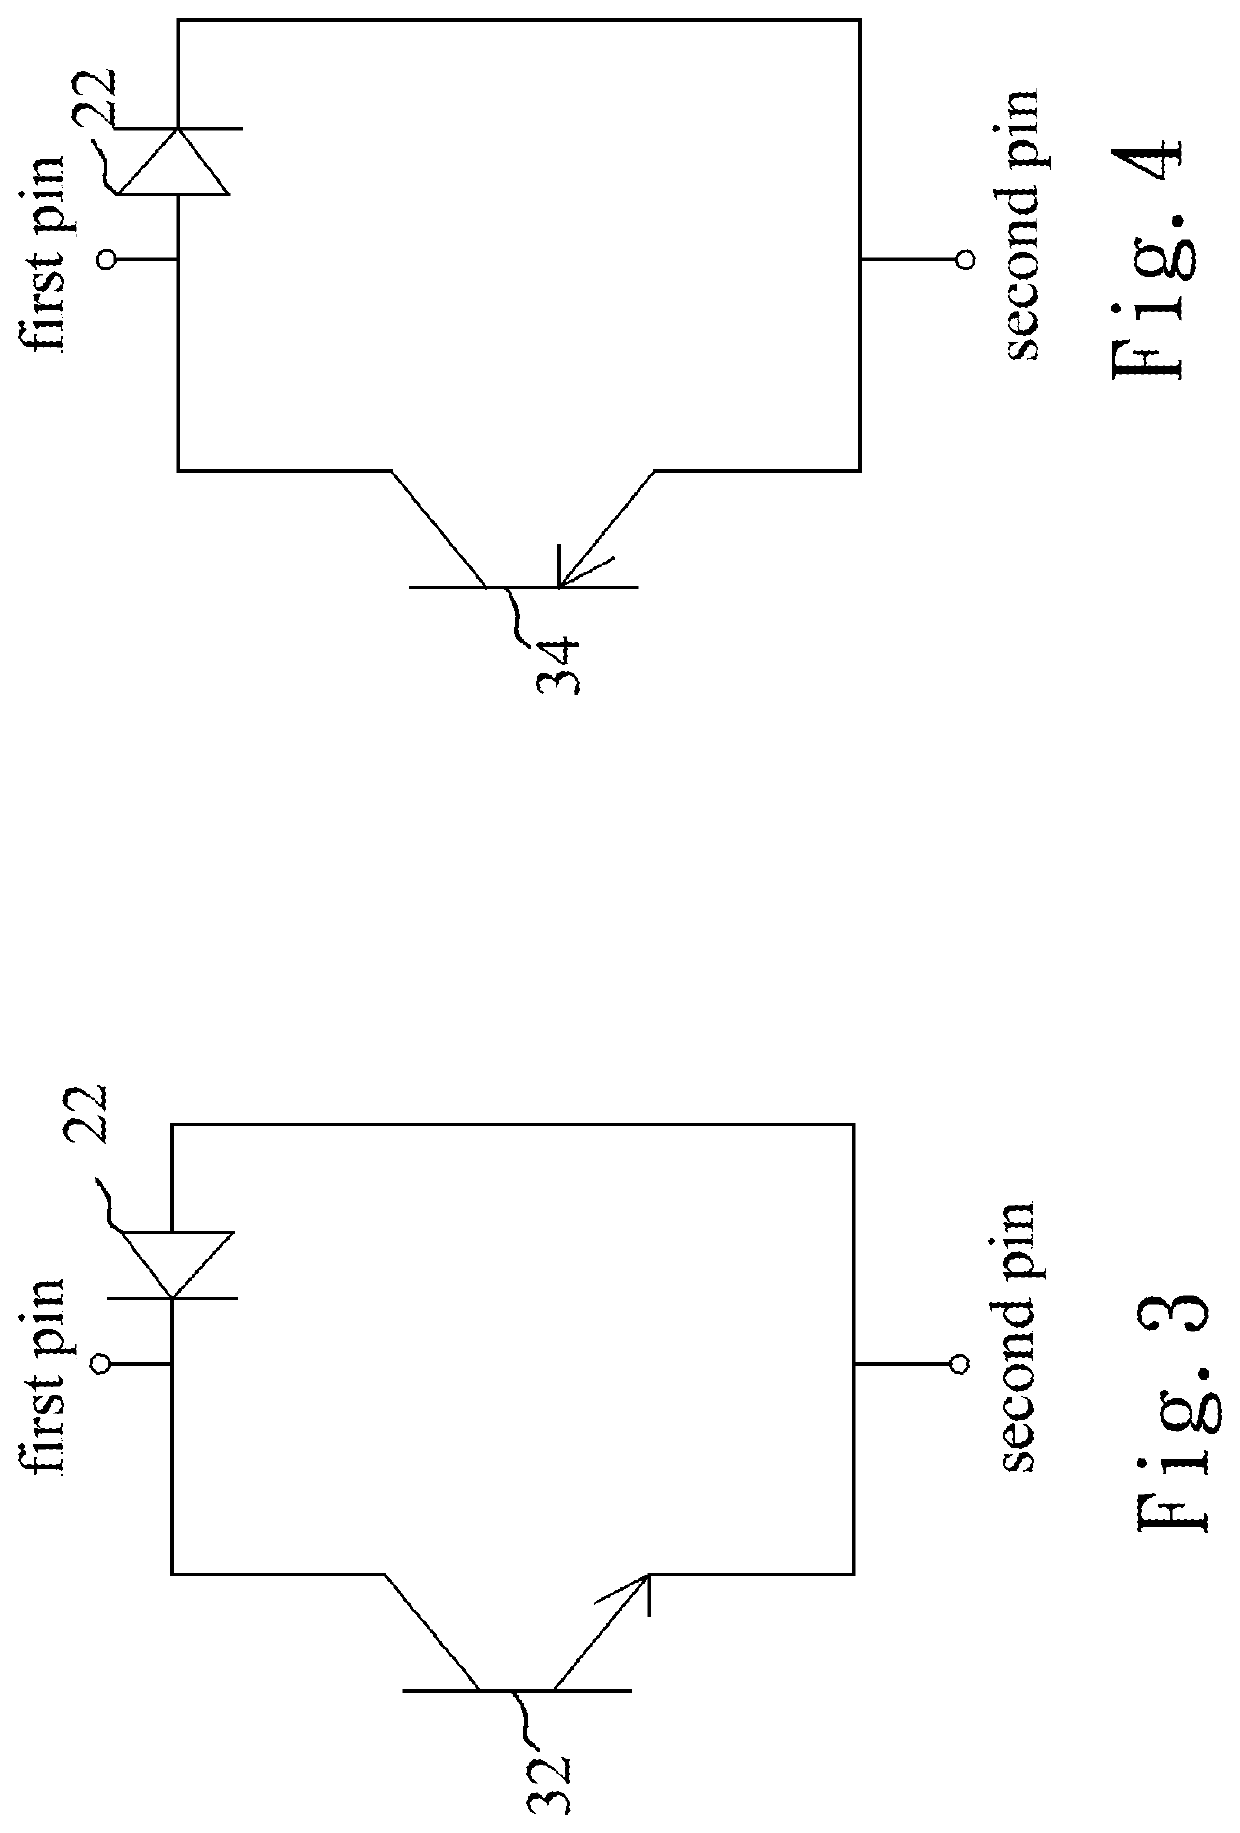 Vertical transient voltage suppression device